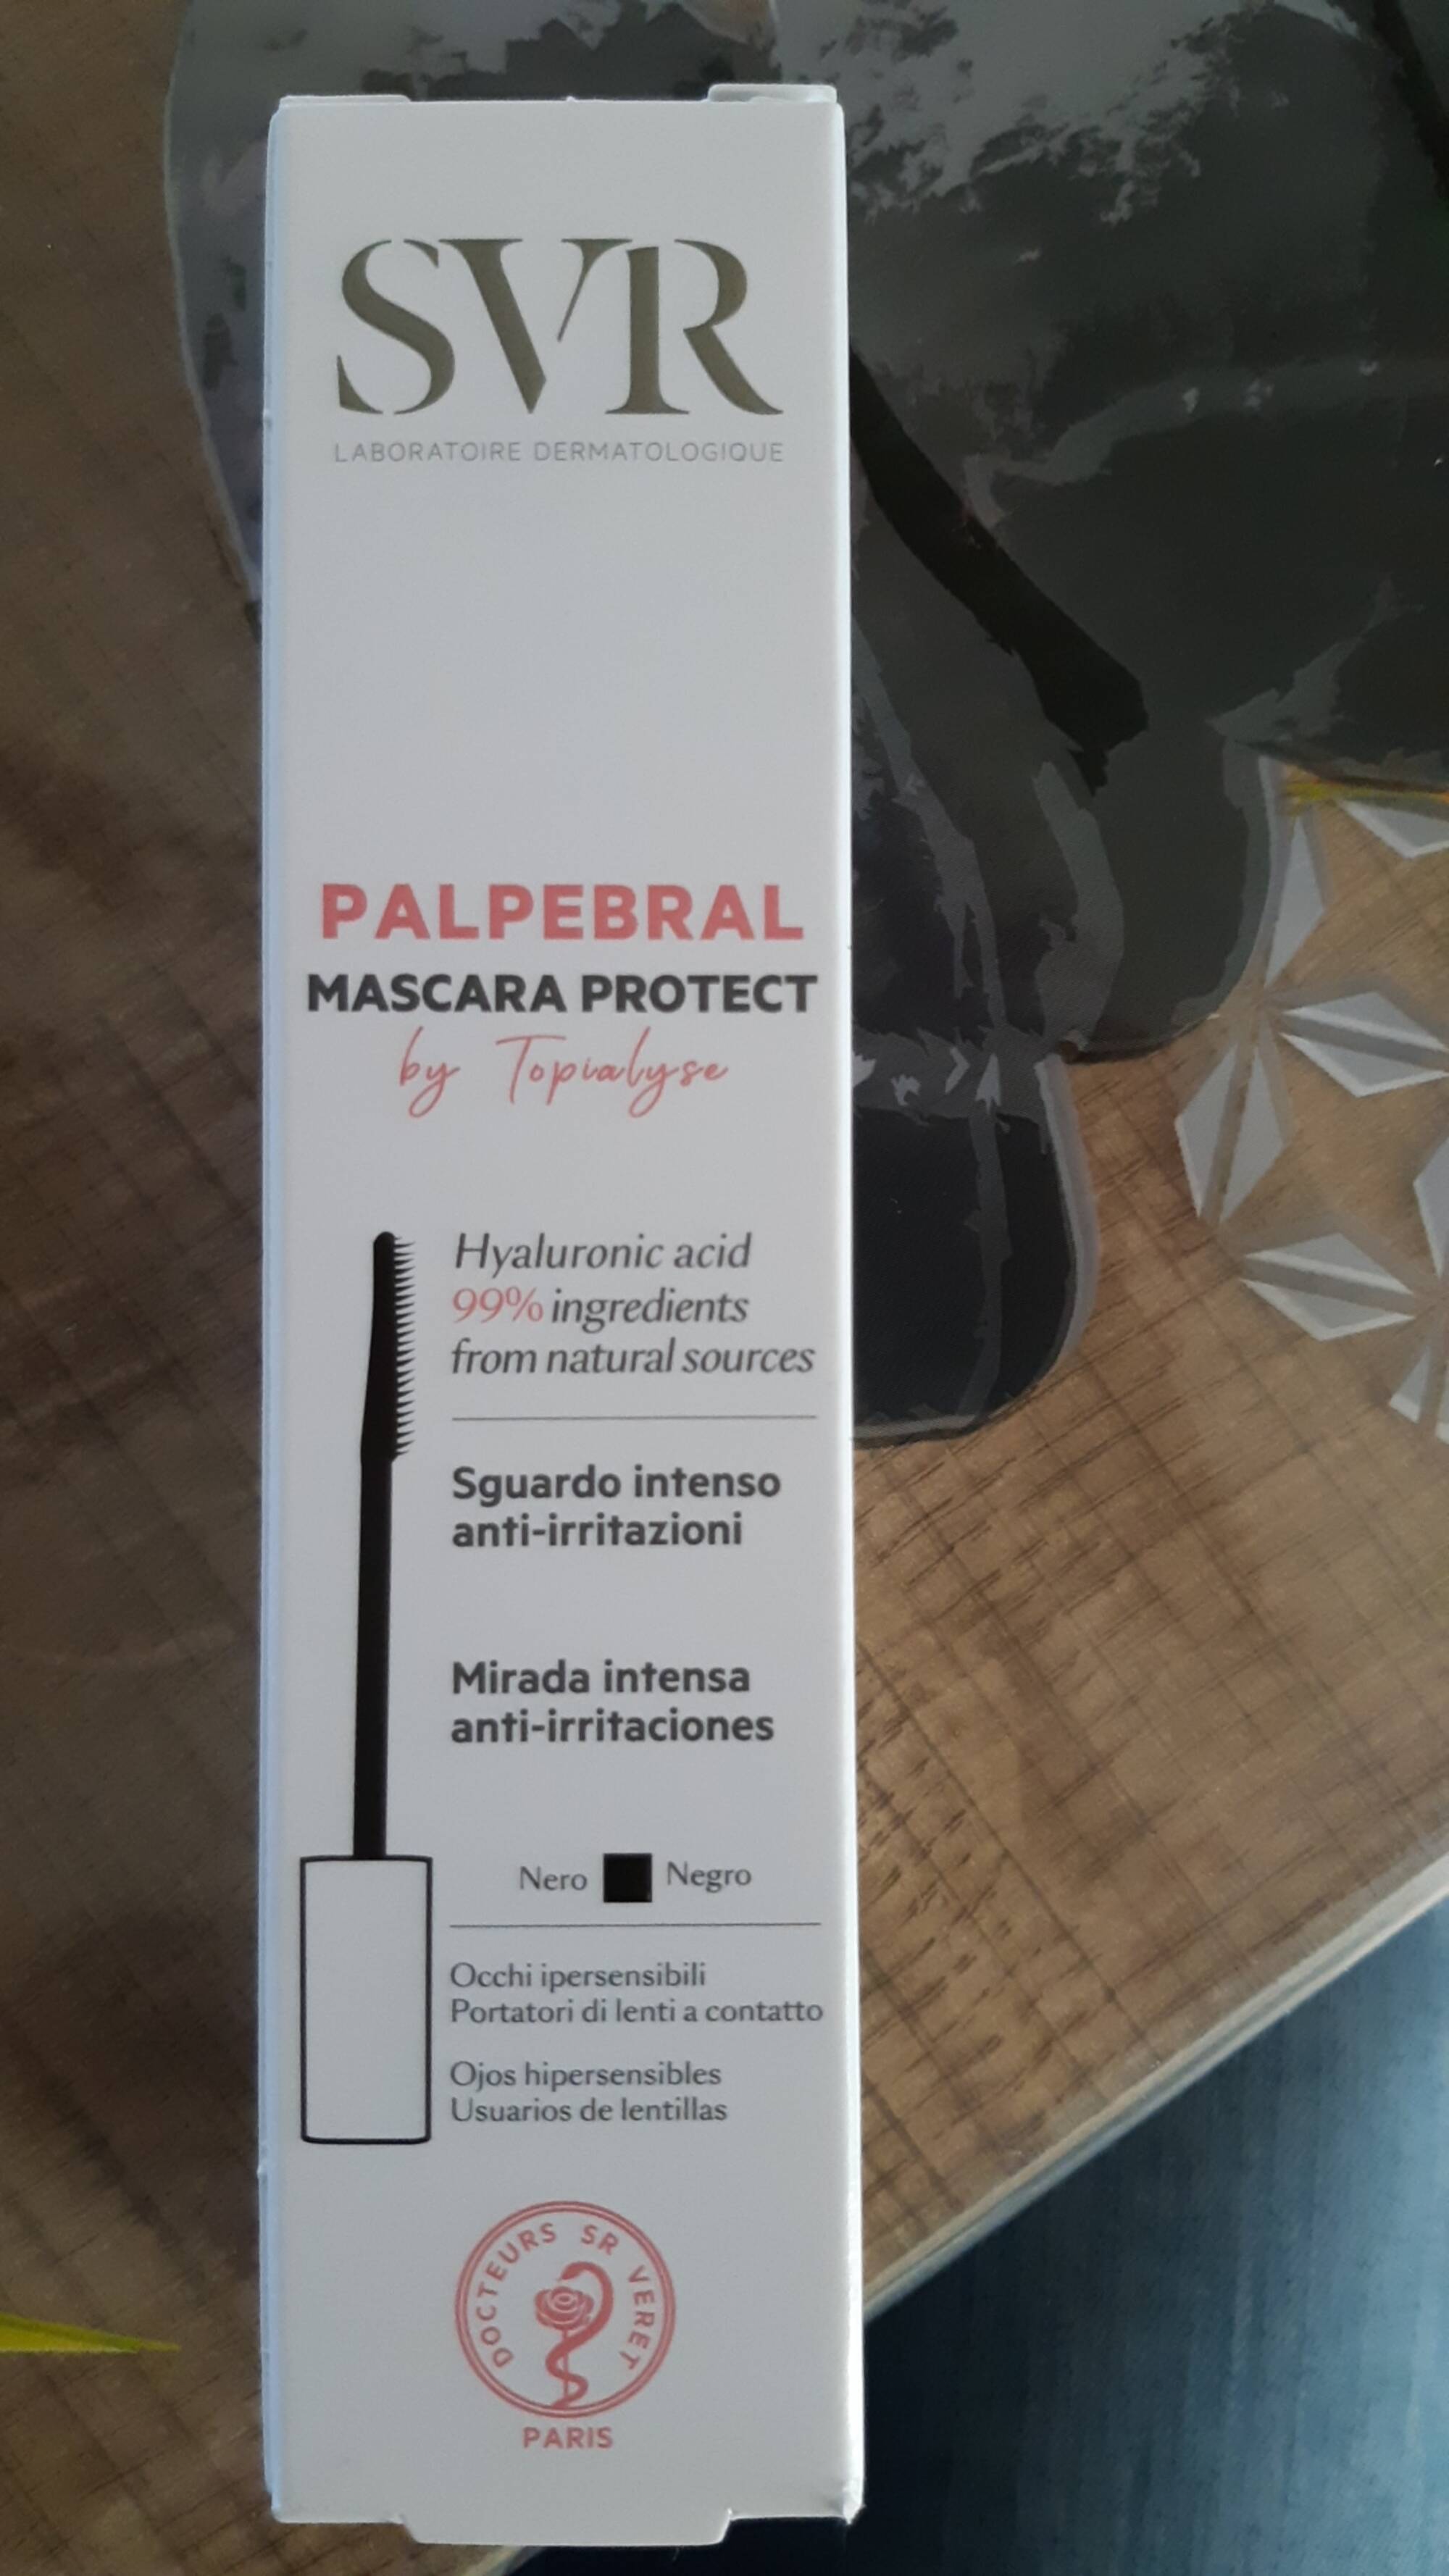 SVR LABORATOIRE DERMATOLOGIQUE - Palpebreal - Mascara protect